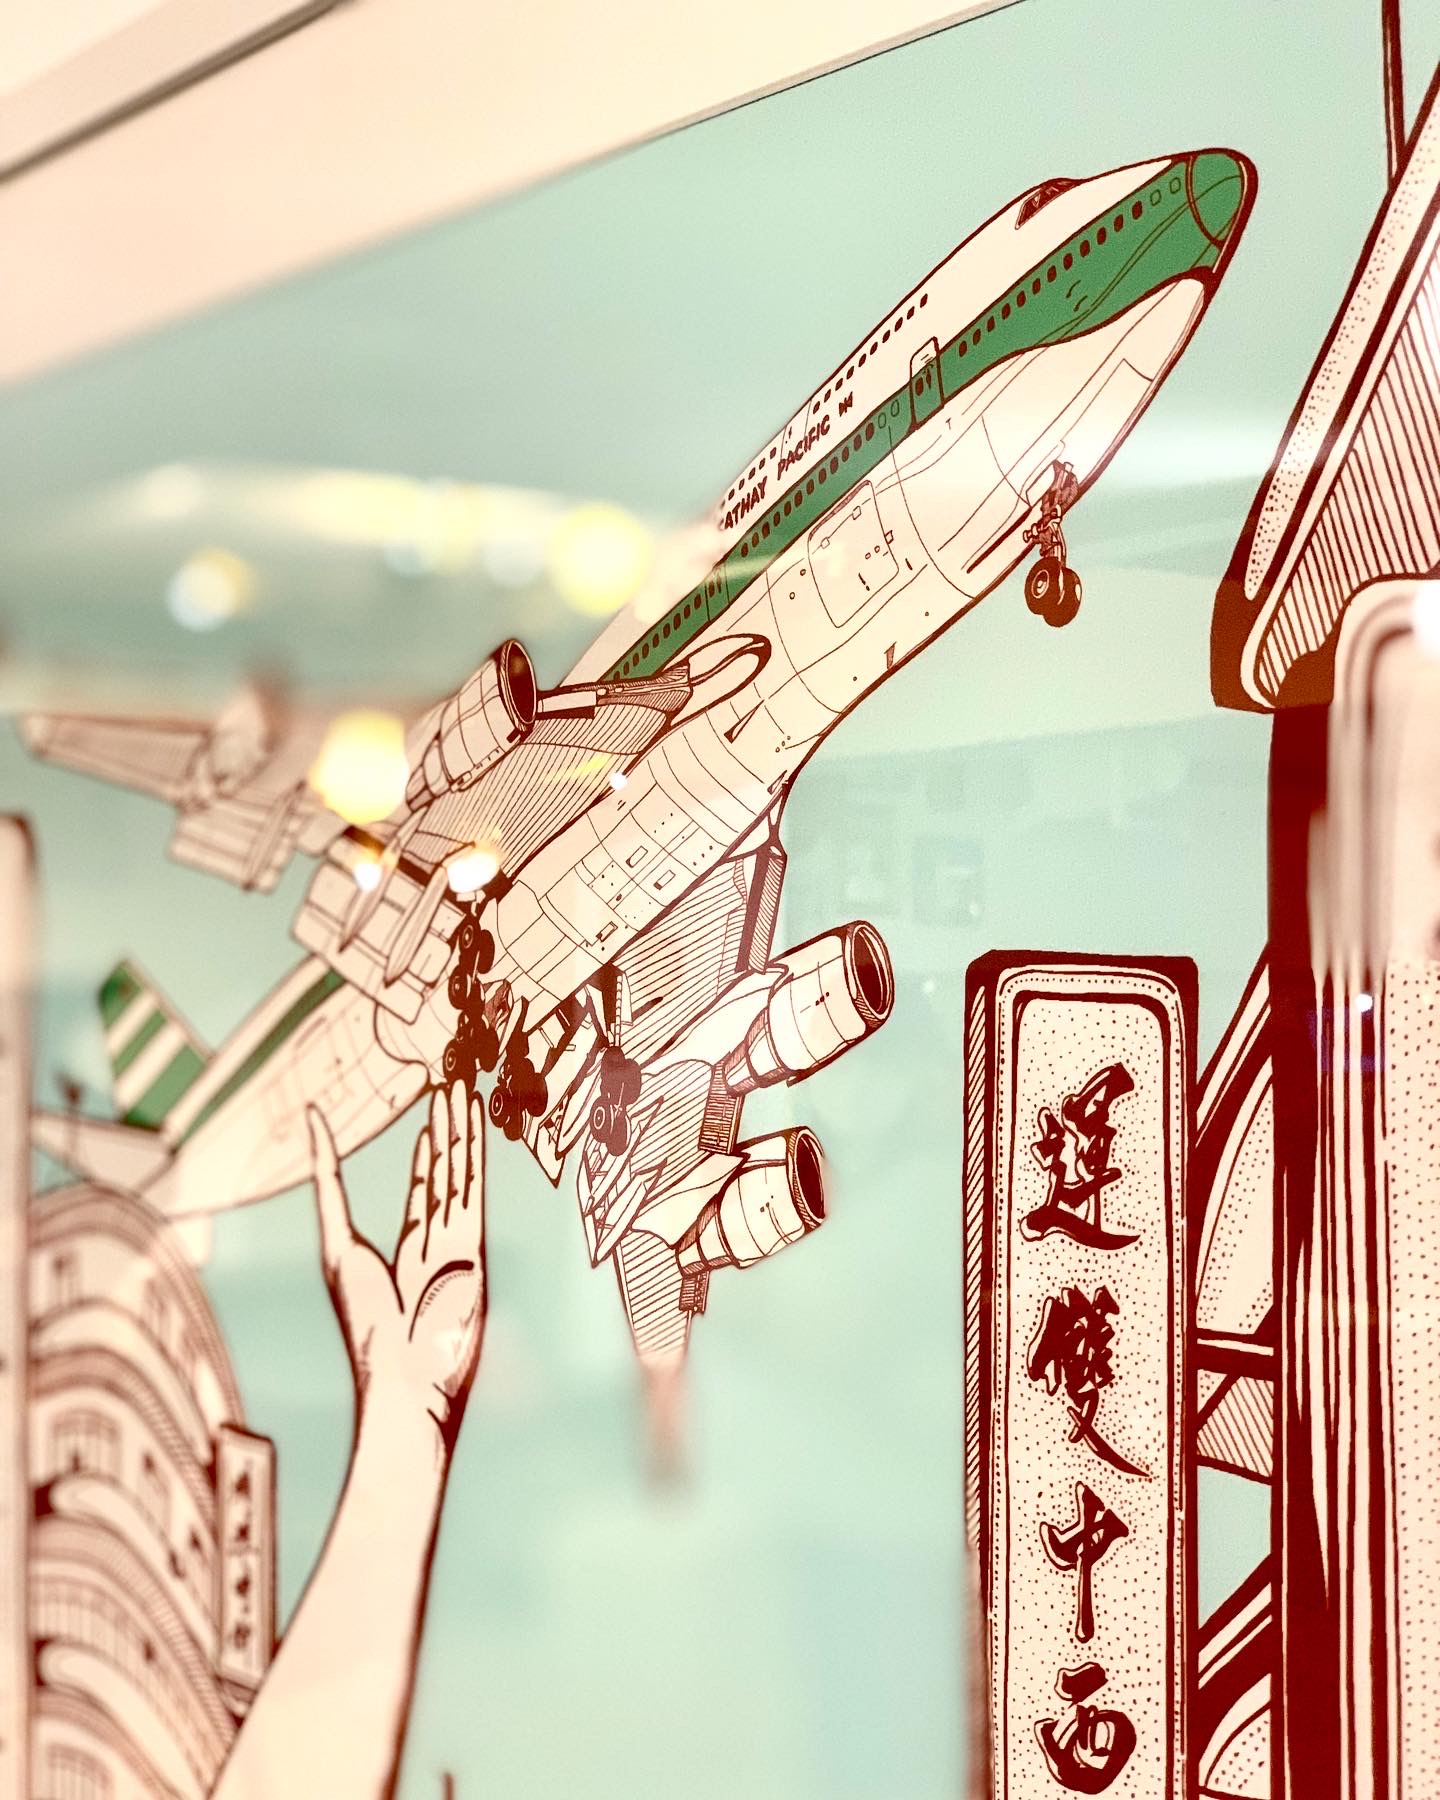 Rick Lo's Good Old Kai Tak artwork, illustrating the Hong Kong old airport in the skies, reaching upward 